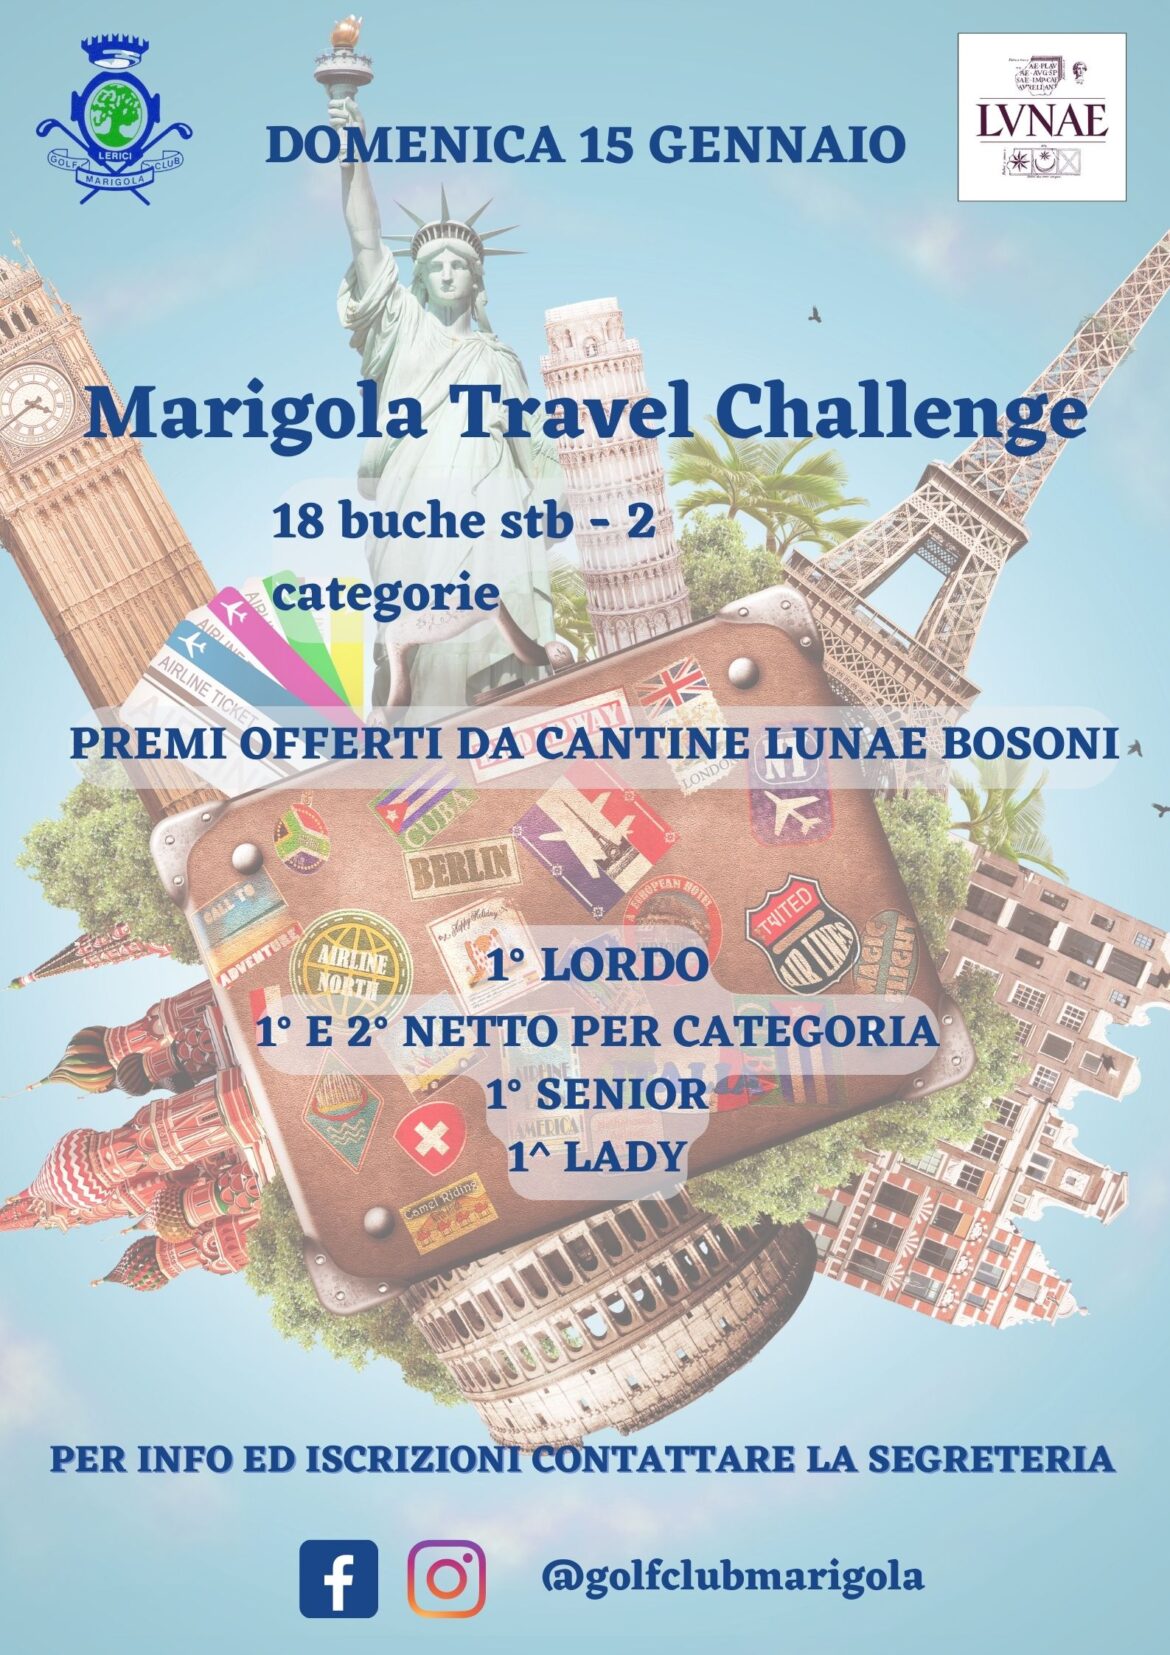 Marigola Travel Challenge – domenica 15 gennaio 2023